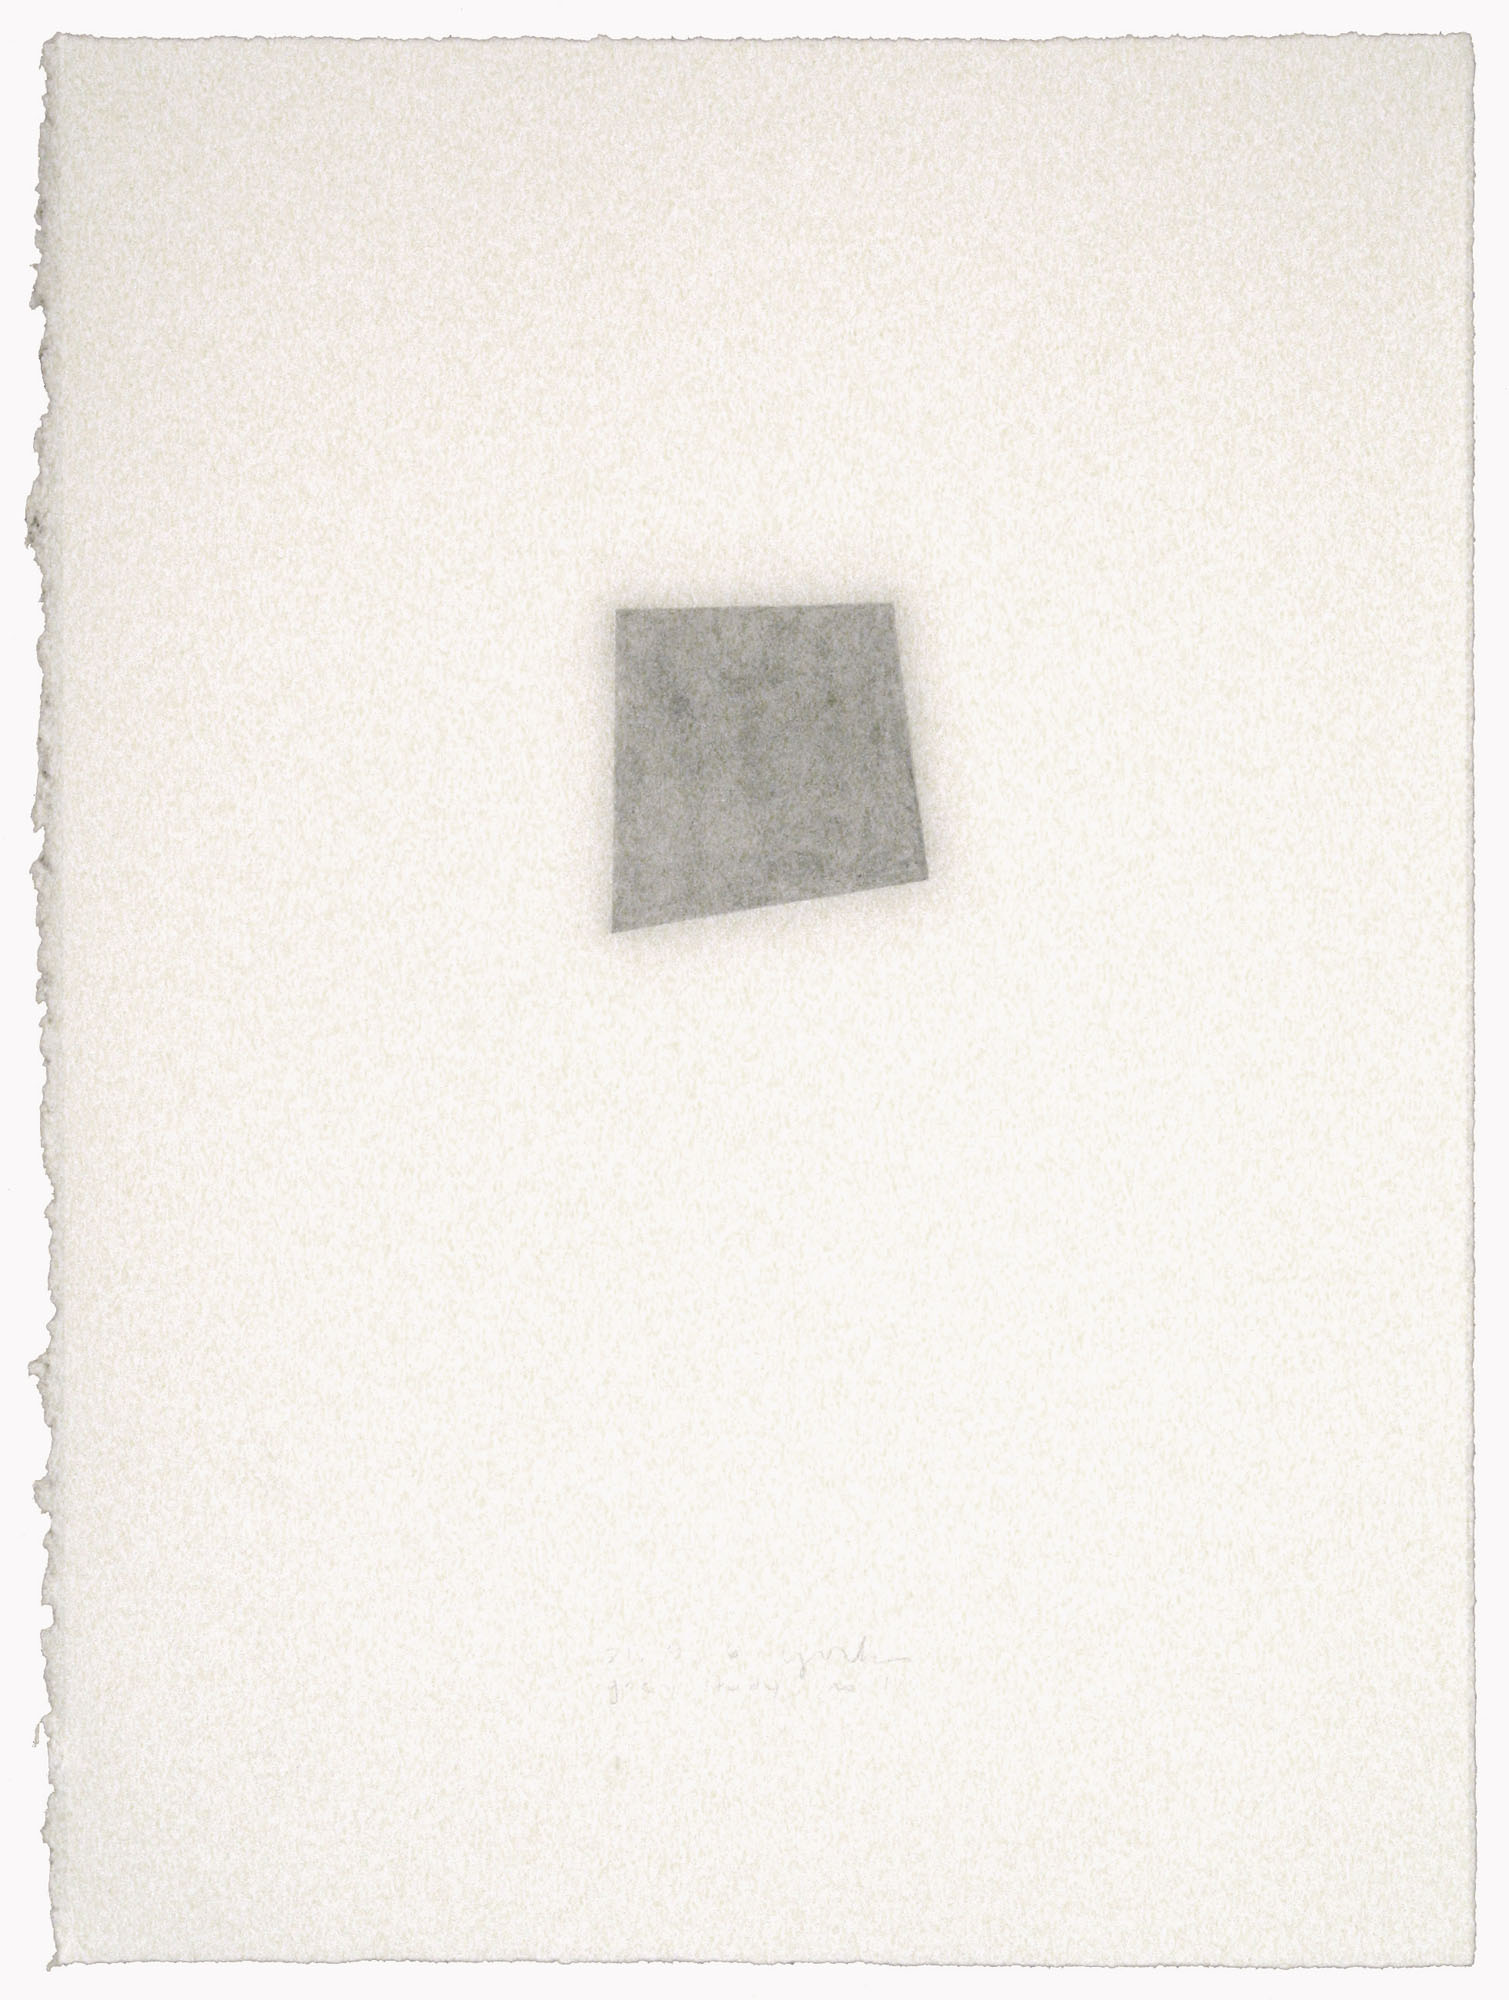   Grey Study, no. 2, 21.9.06, 2007  Graphite pencil on paper,&nbsp;30” x 22” 